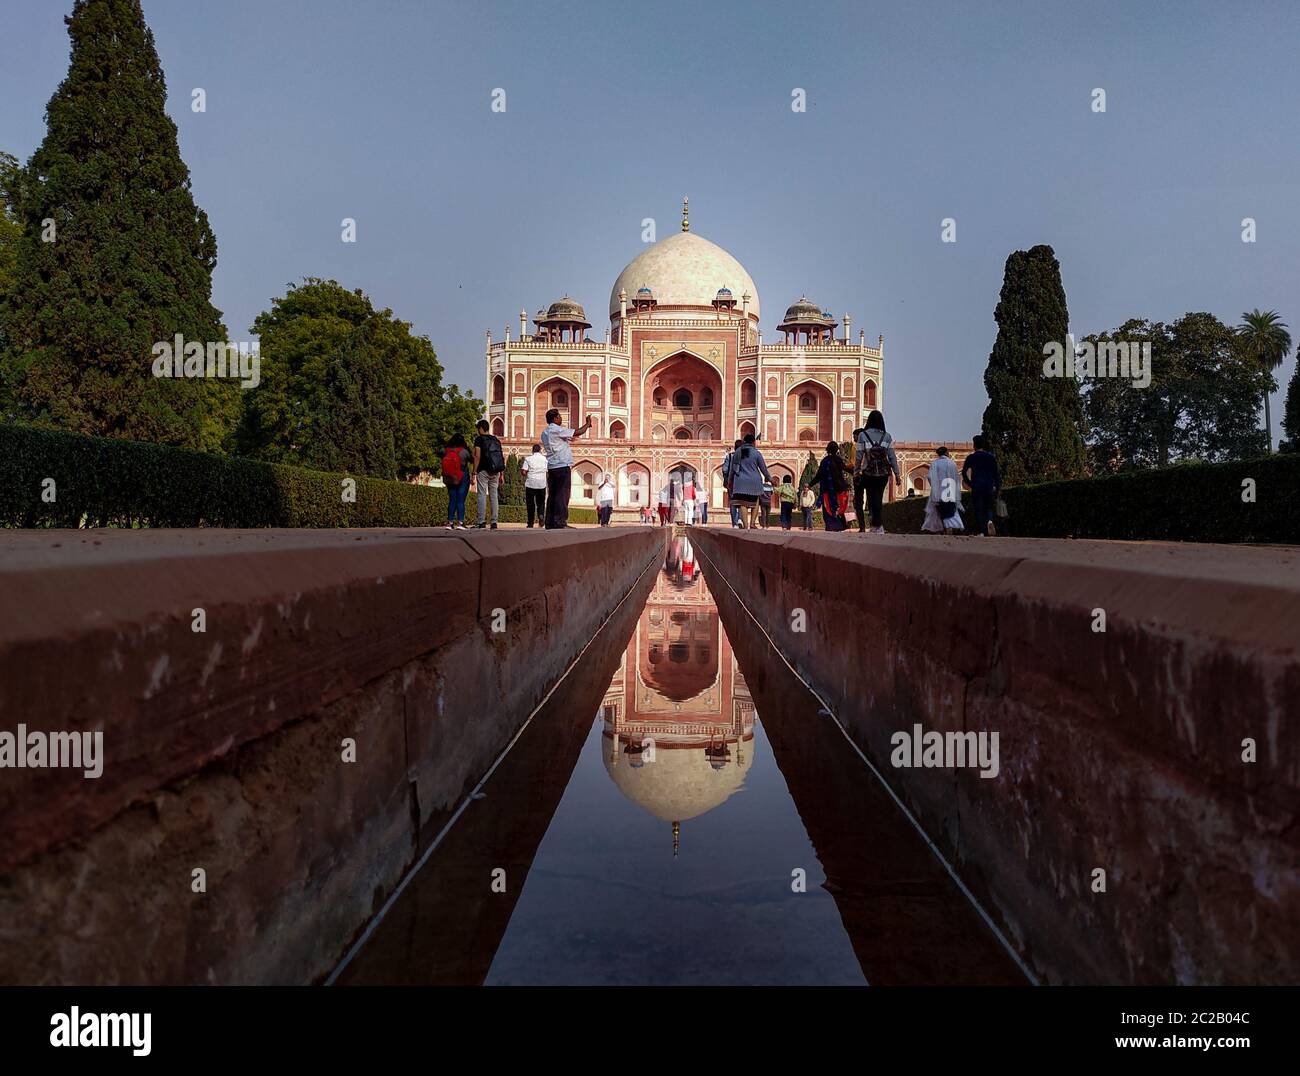 Editorial dated:11th february 2020 Location: Delhi India, Humayun's Tomb. Tourist visiting Humayun's tomb. Stock Photo